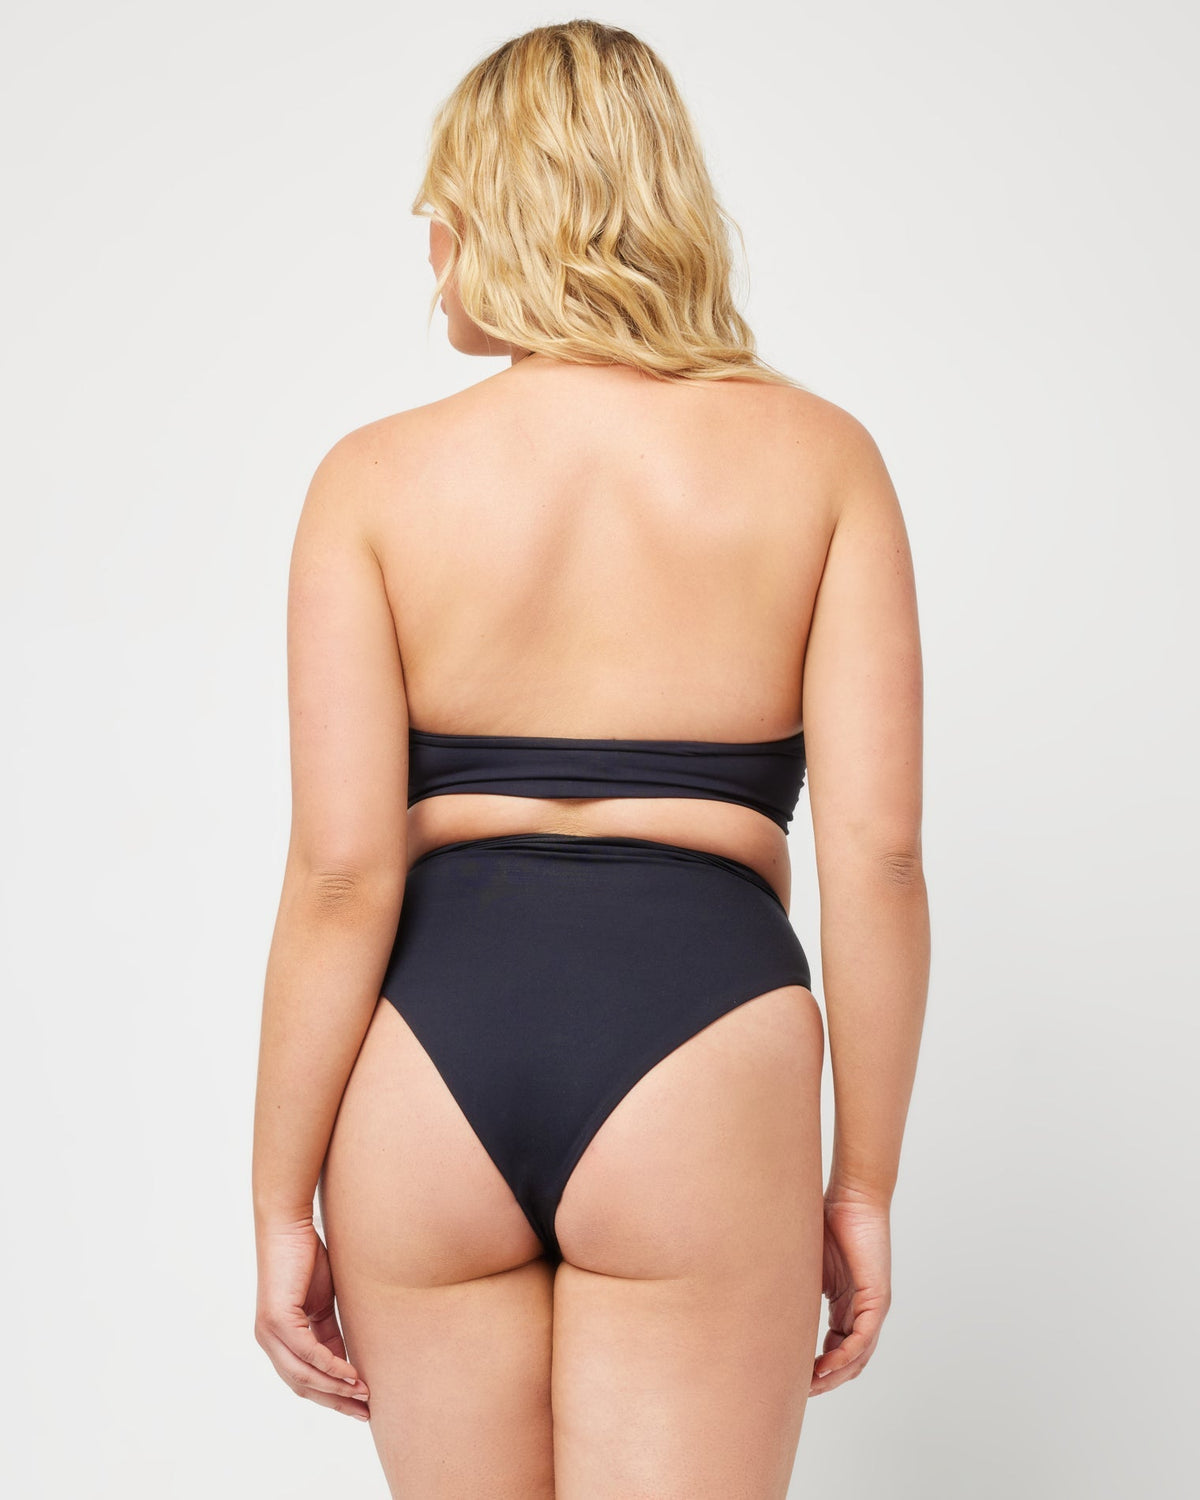 Arlo Bikini Bottom - Black Black | Model: Sydney (size: XL)